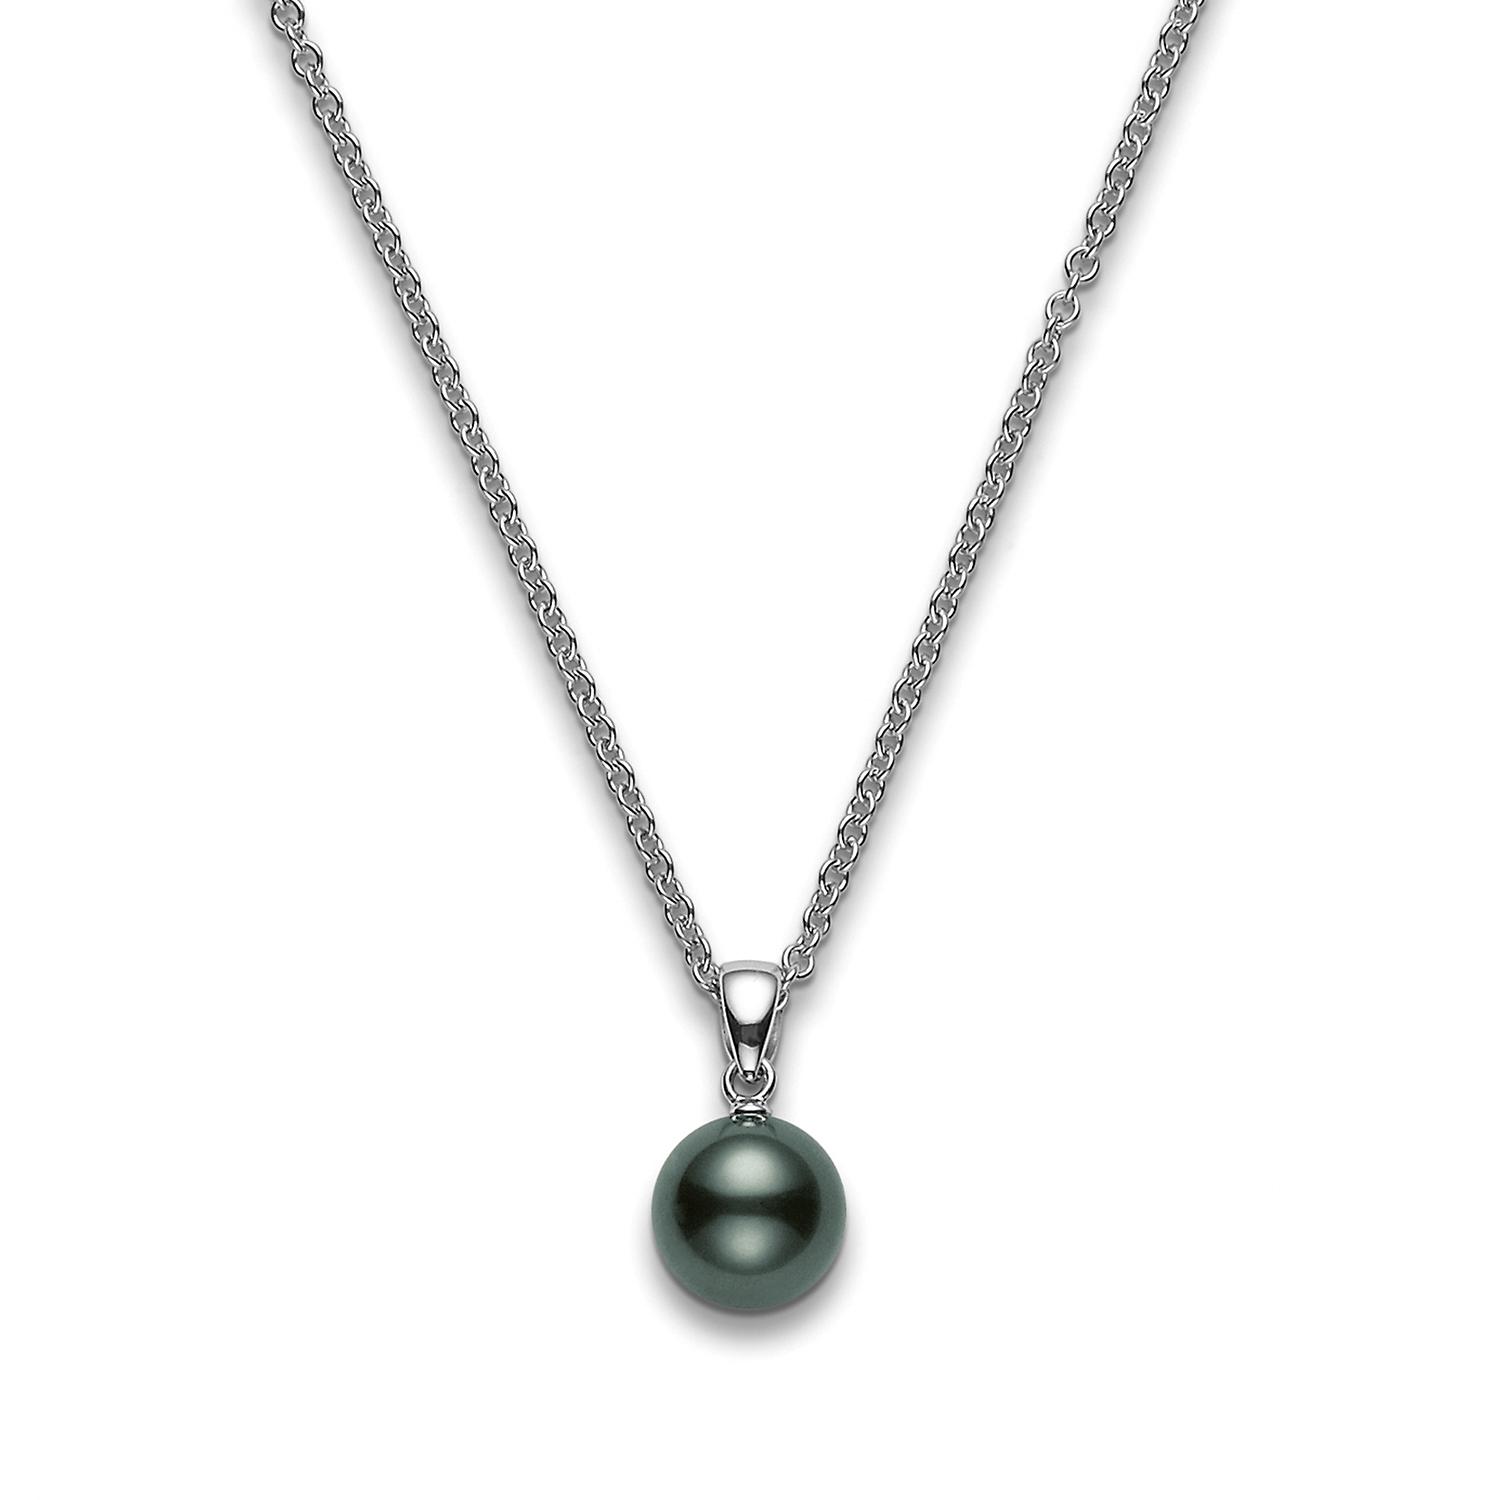 Mikimoto 8mm "A+" Black South Sea Pearl Pendant Necklace